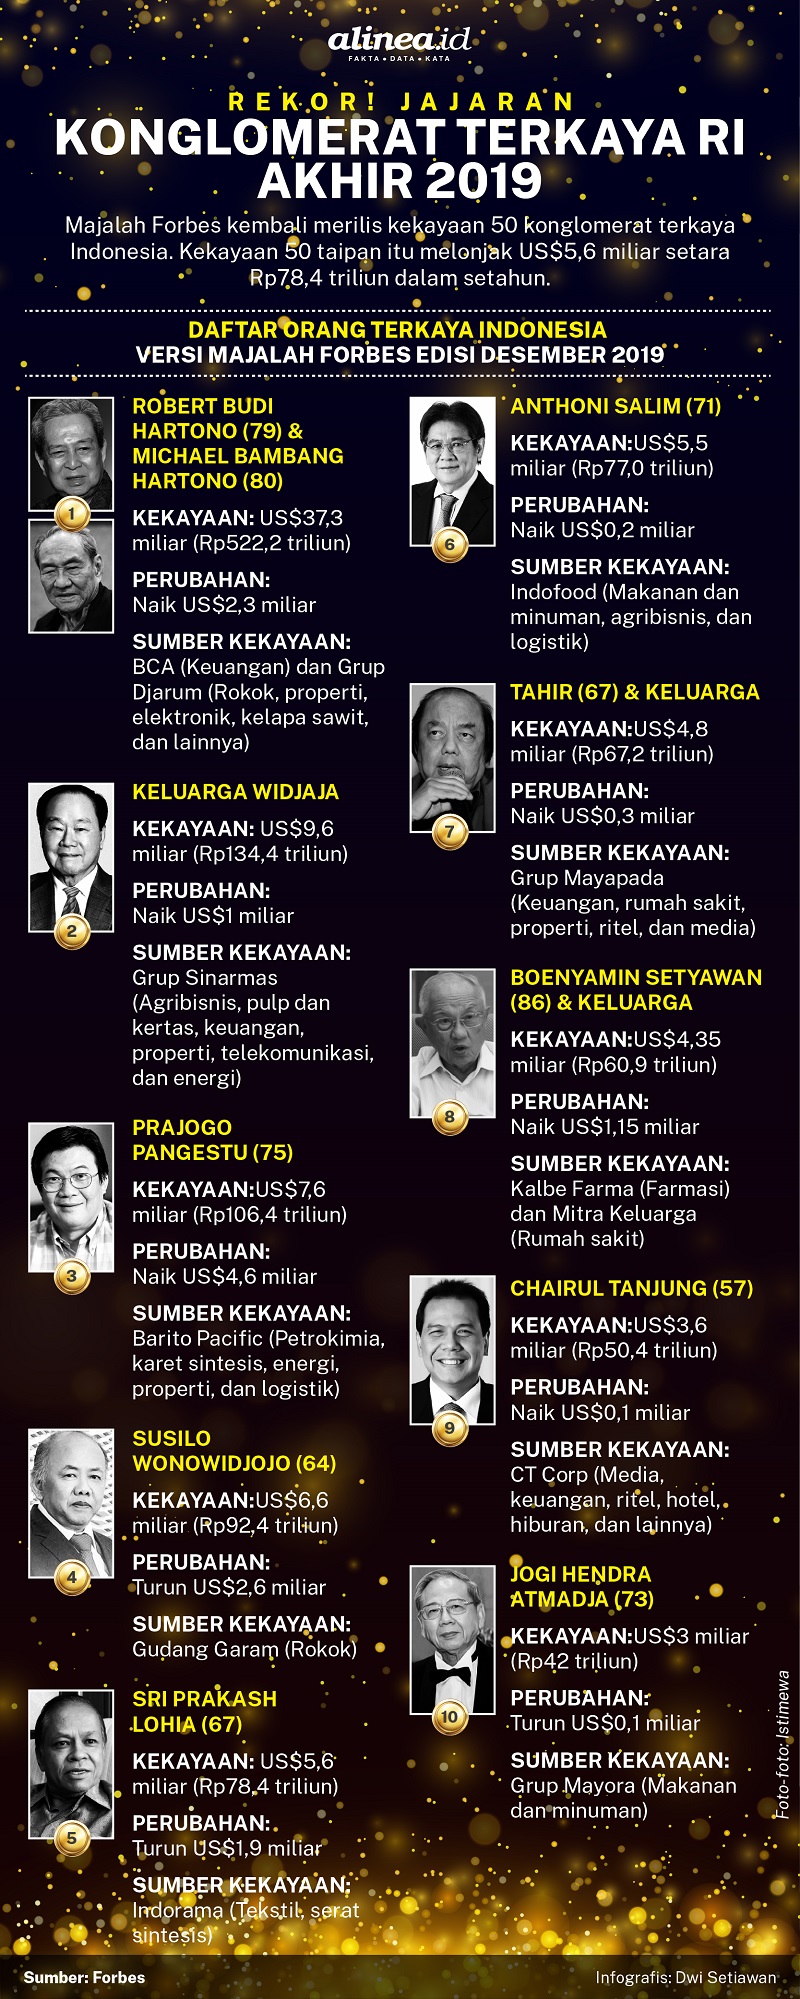 Daftar kekayaan 10 konglomerat Indonesia versi majalah Forbes. Alinea.id/Dwi Setiawan